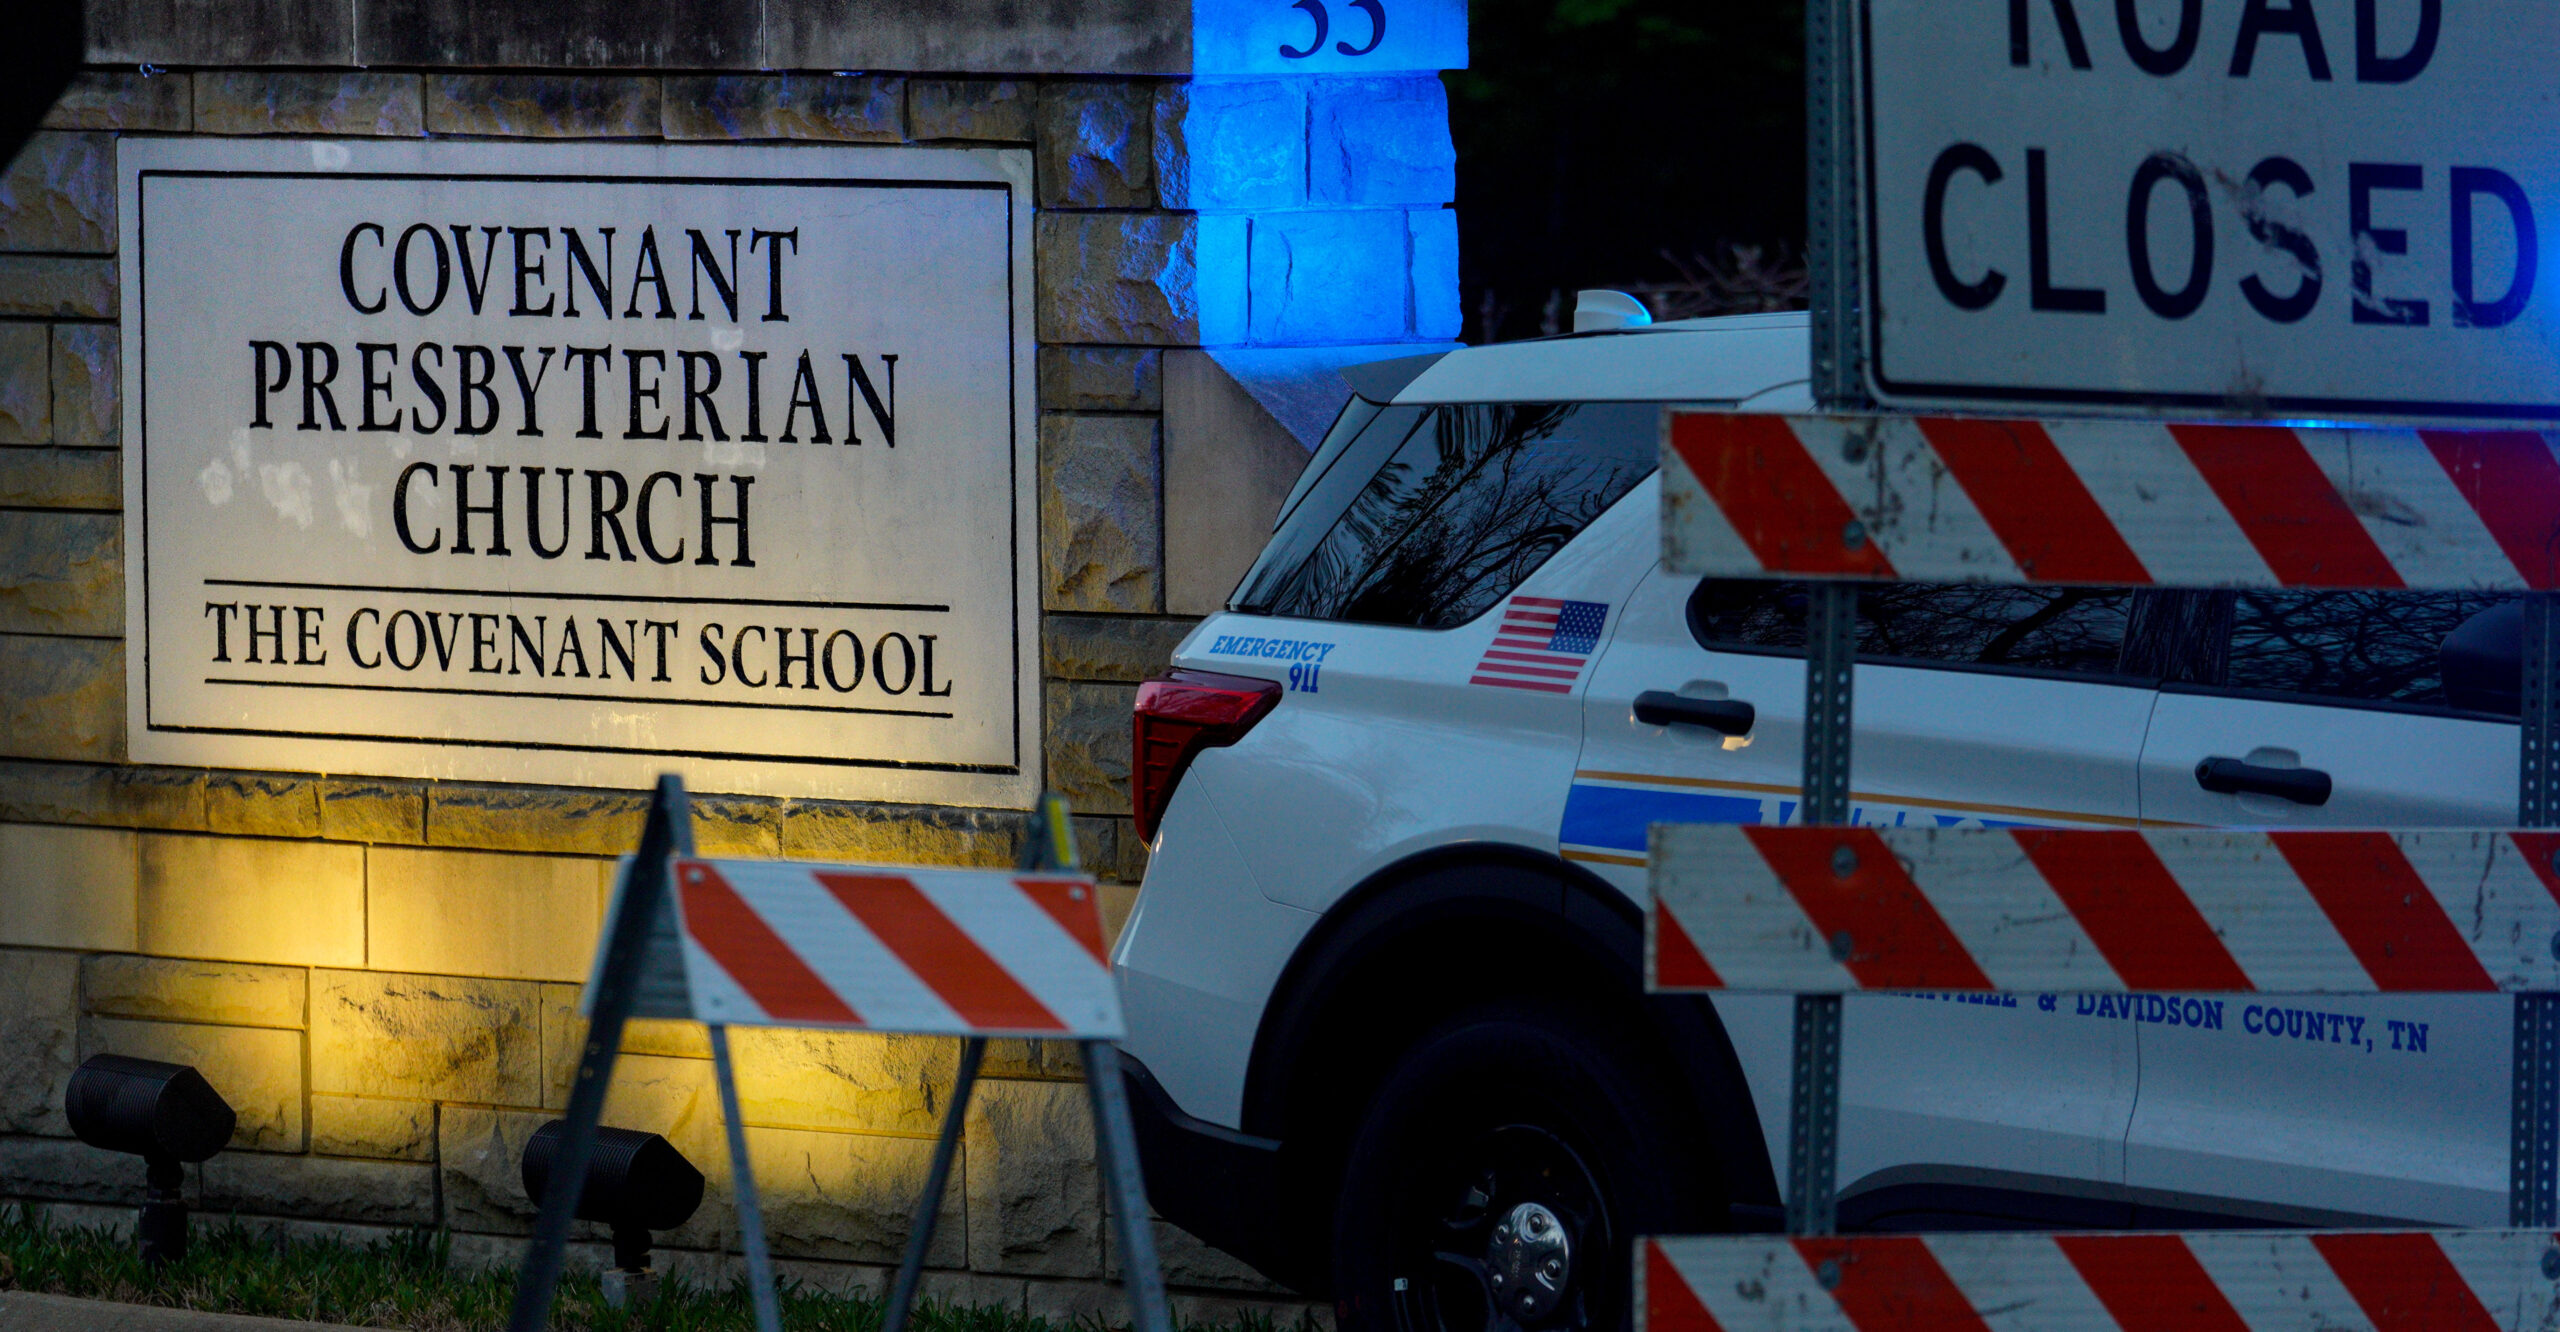 Josh Hawley Calls for 'Hate Crime' Investigation Into Deadly School Shooting